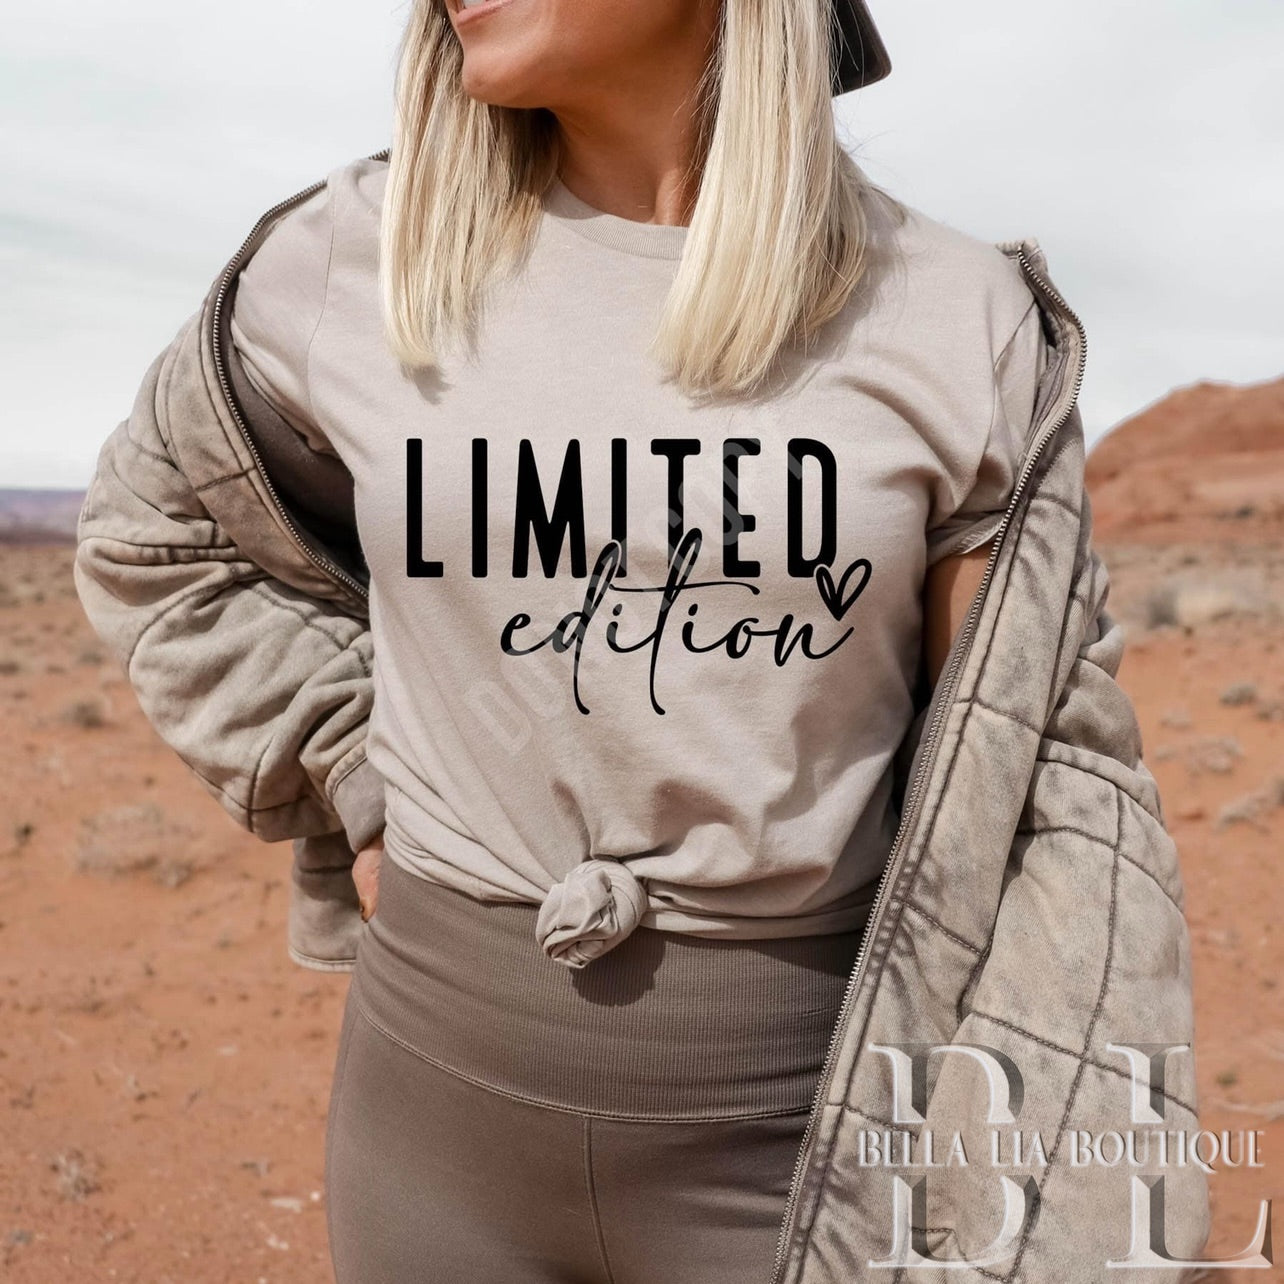 Limited Edition Graphic Tee or Sweatshirt - Bella Lia Boutique